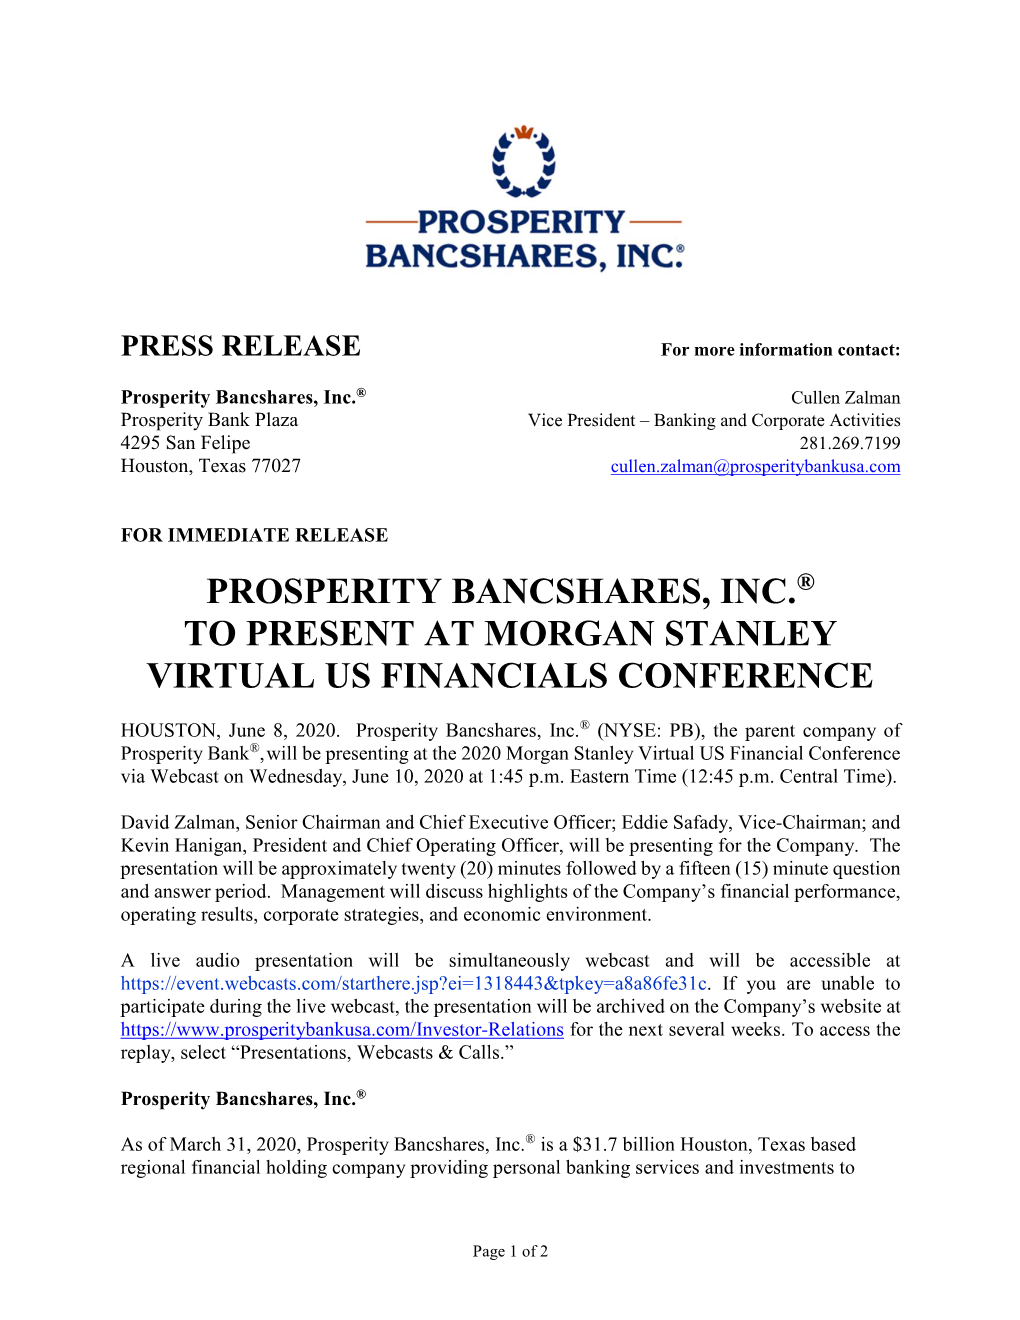 PROSPERITY BANCSHARES, INC. ® to Present at Morgan Stanley Virtual